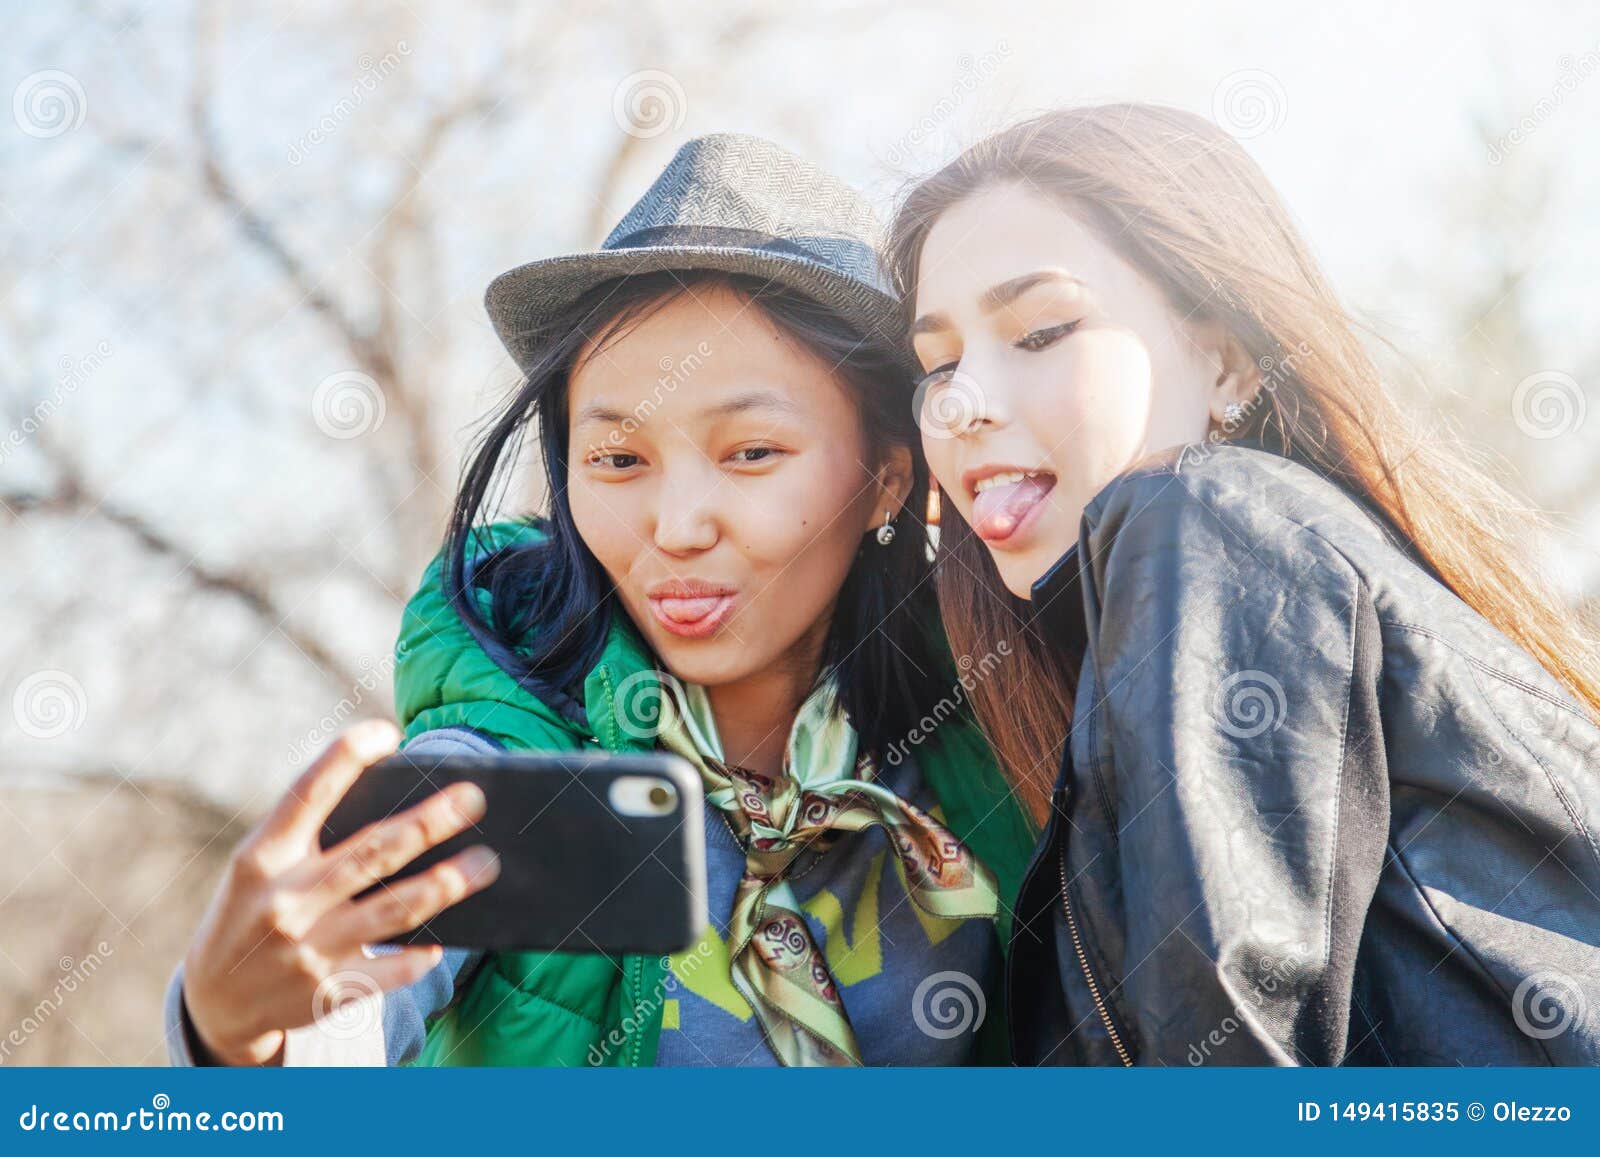 https://thumbs.dreamstime.com/z/two-asian-girlfriends-teen-girls-new-technology-trends-friendship-concept-trendy-making-video-story-social-network-app-149415835.jpg